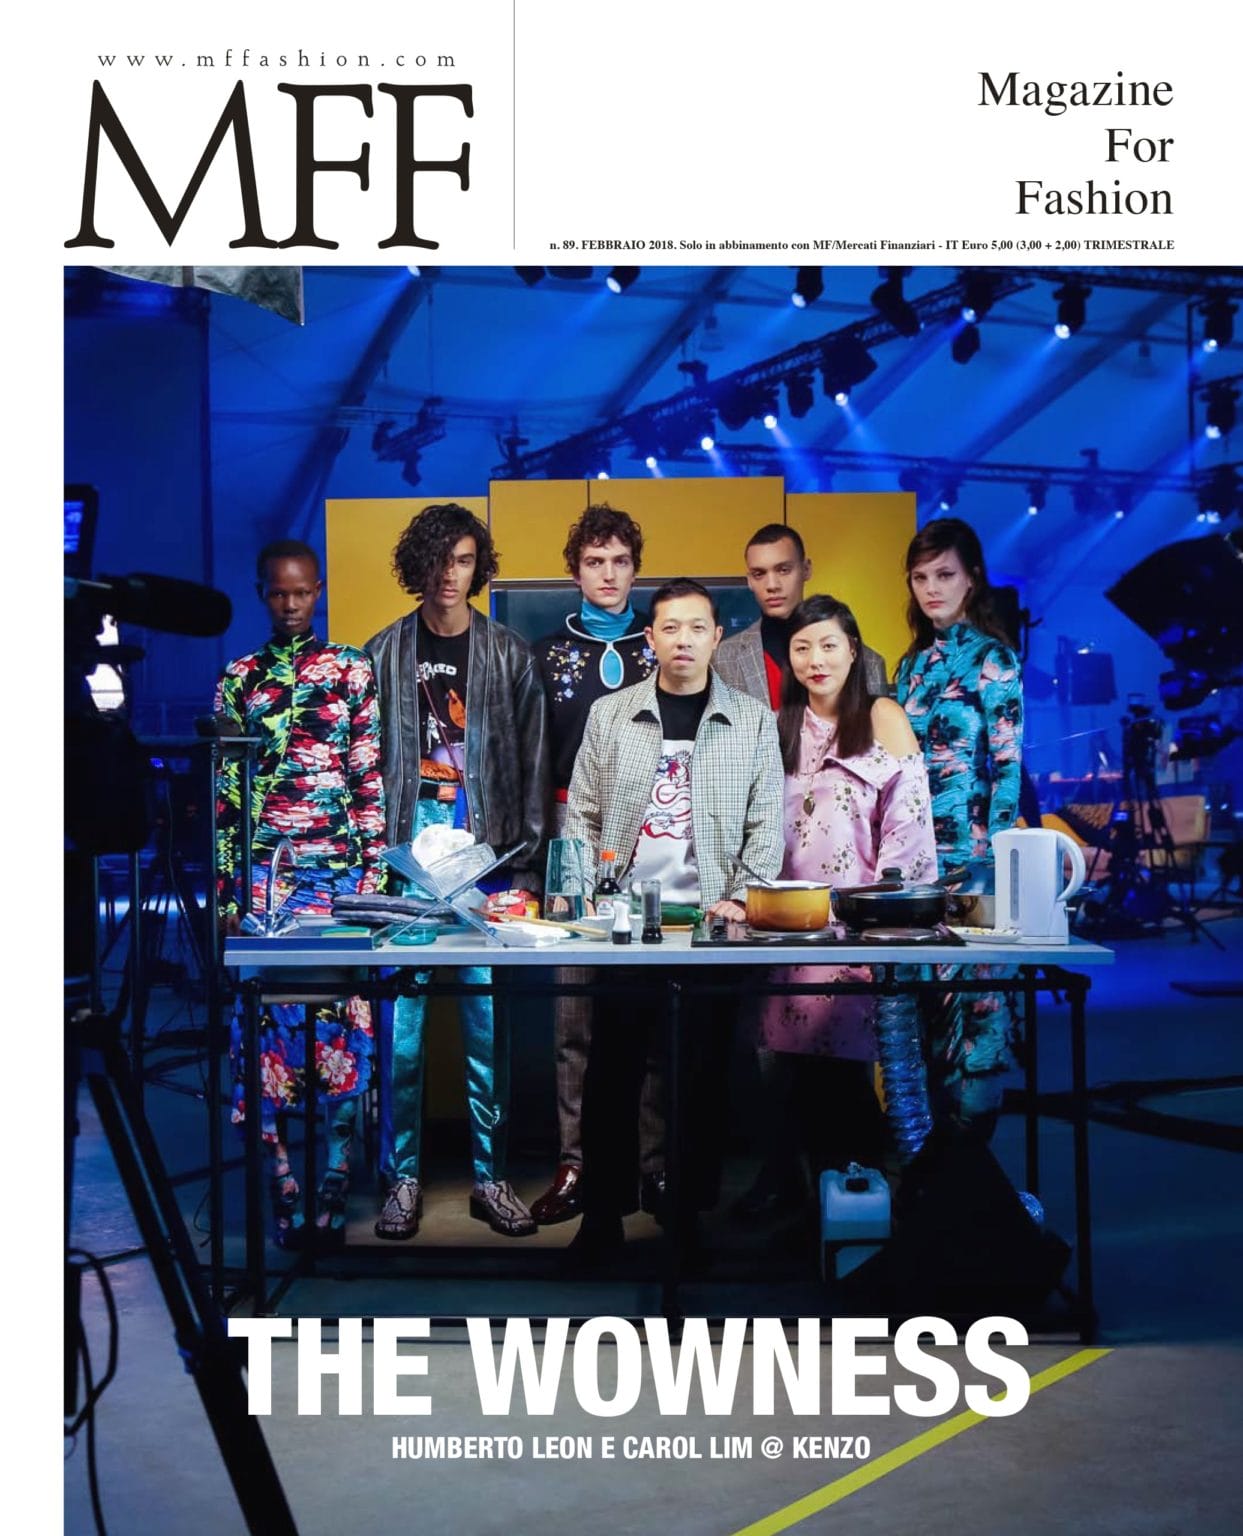 Kenzo Fashion Editorial Shooting, Cover Story for MFFashion. Photo by Valerio Mezzanotti